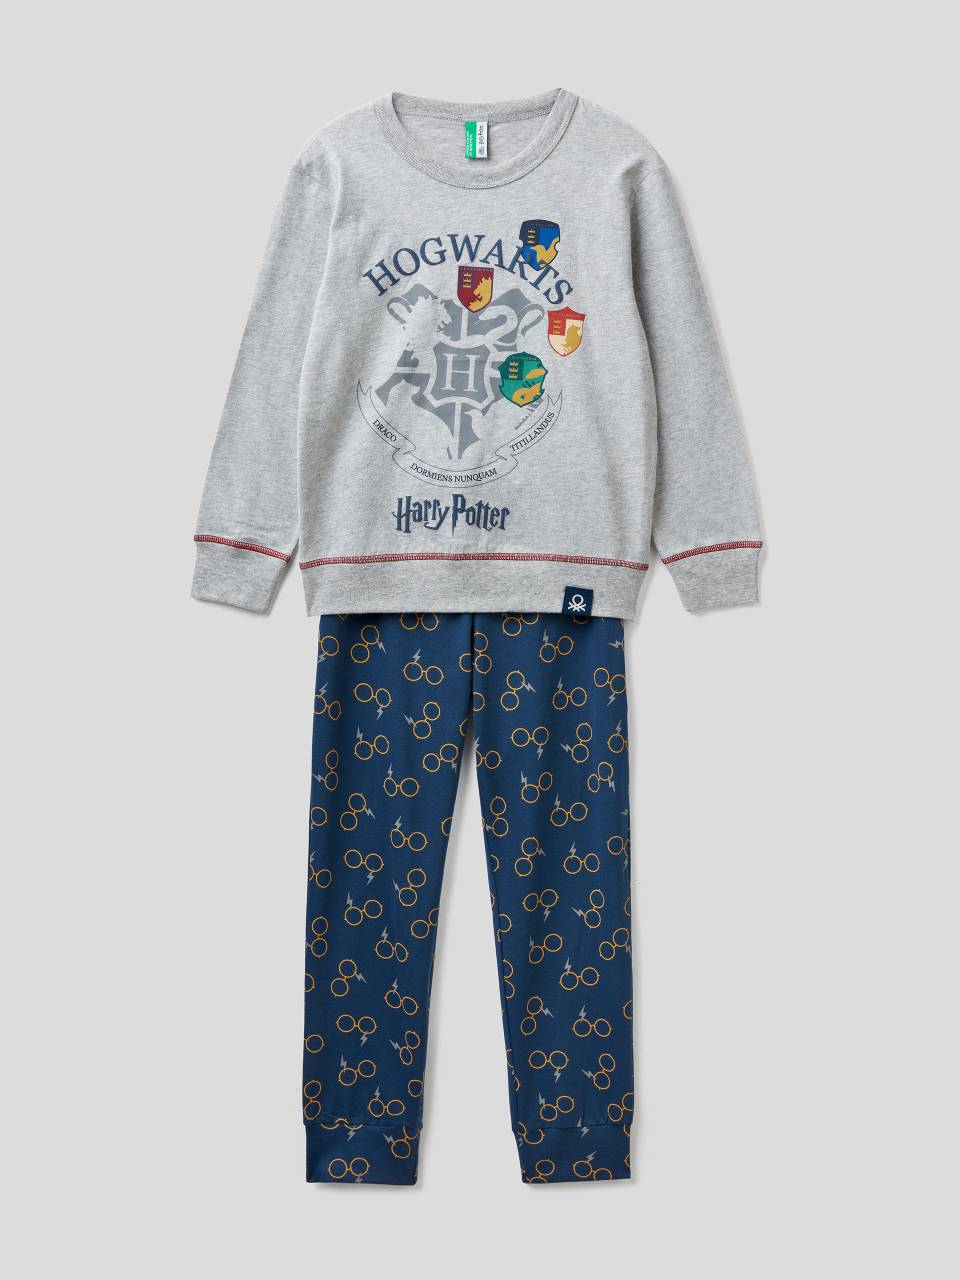 Pijama de niña Harry Potter largo estampado